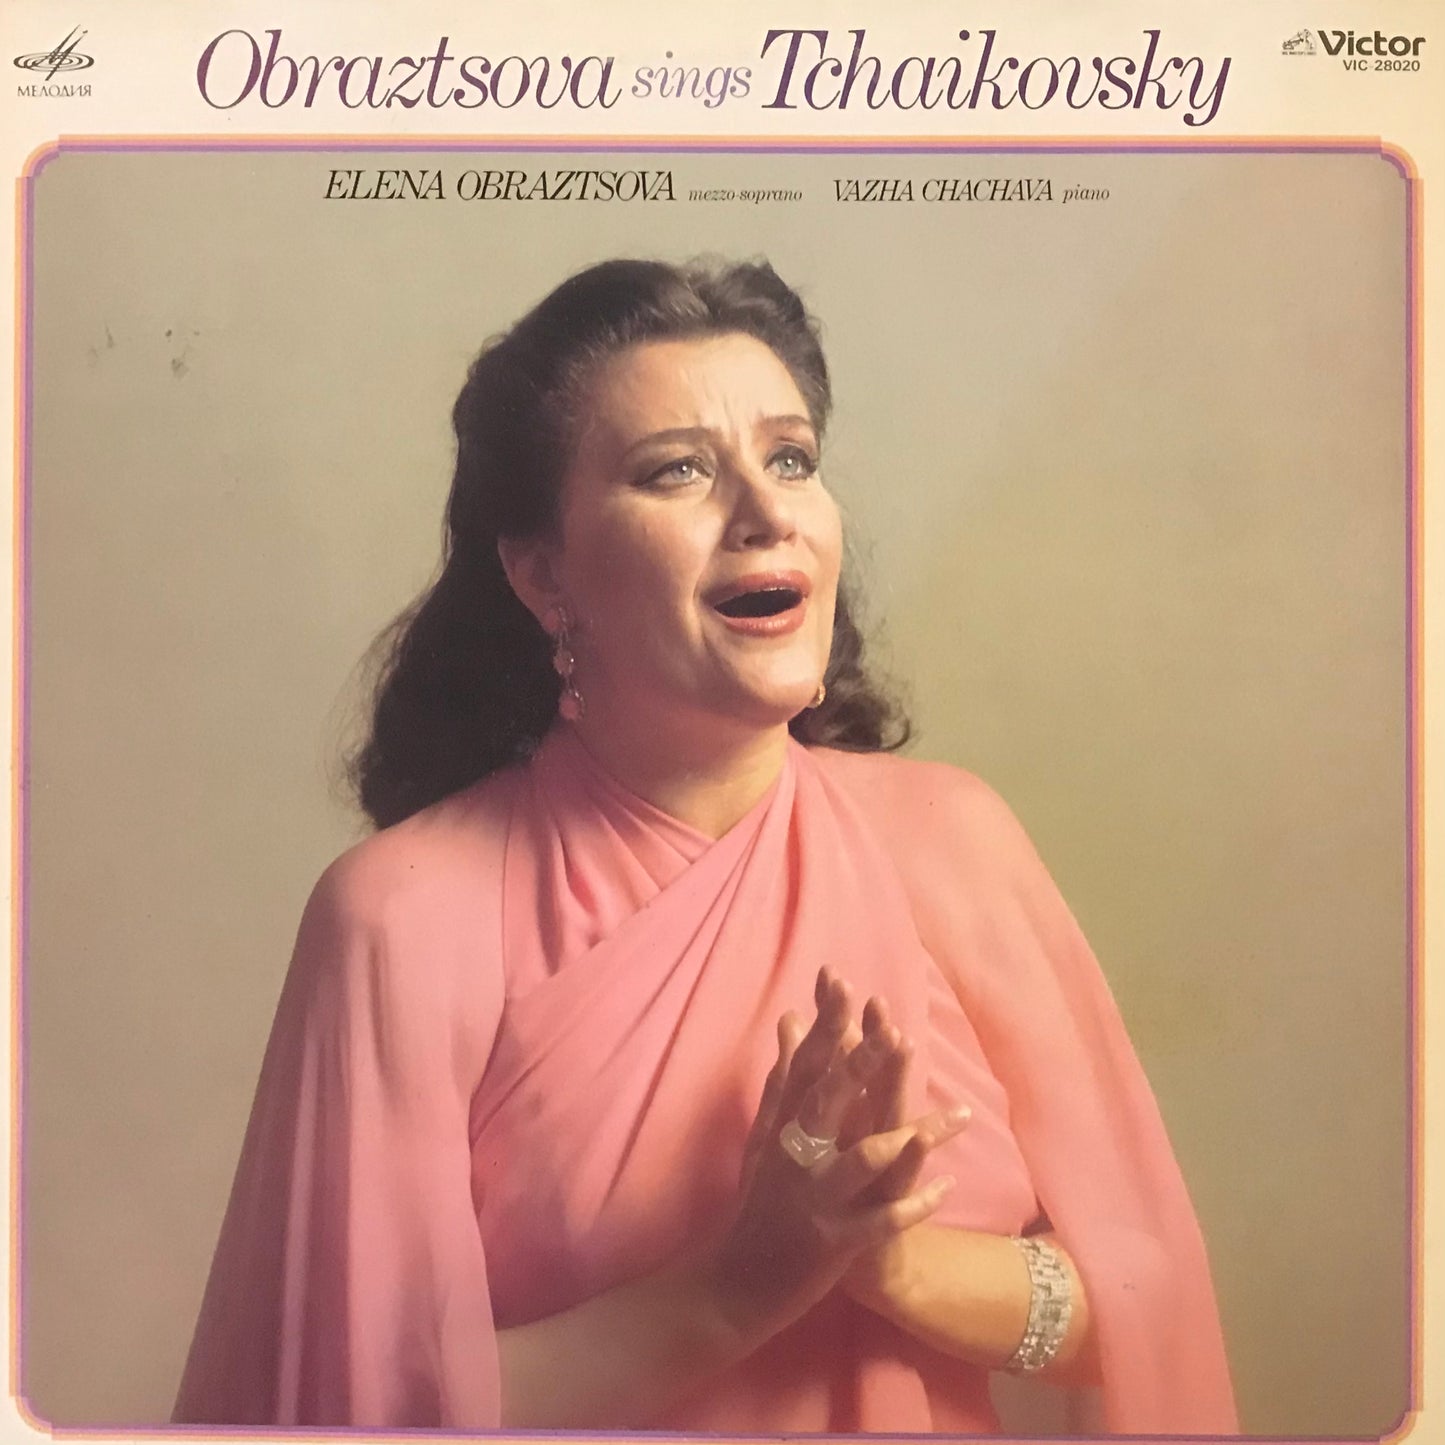 Obraztsova sings Tchaikovsky